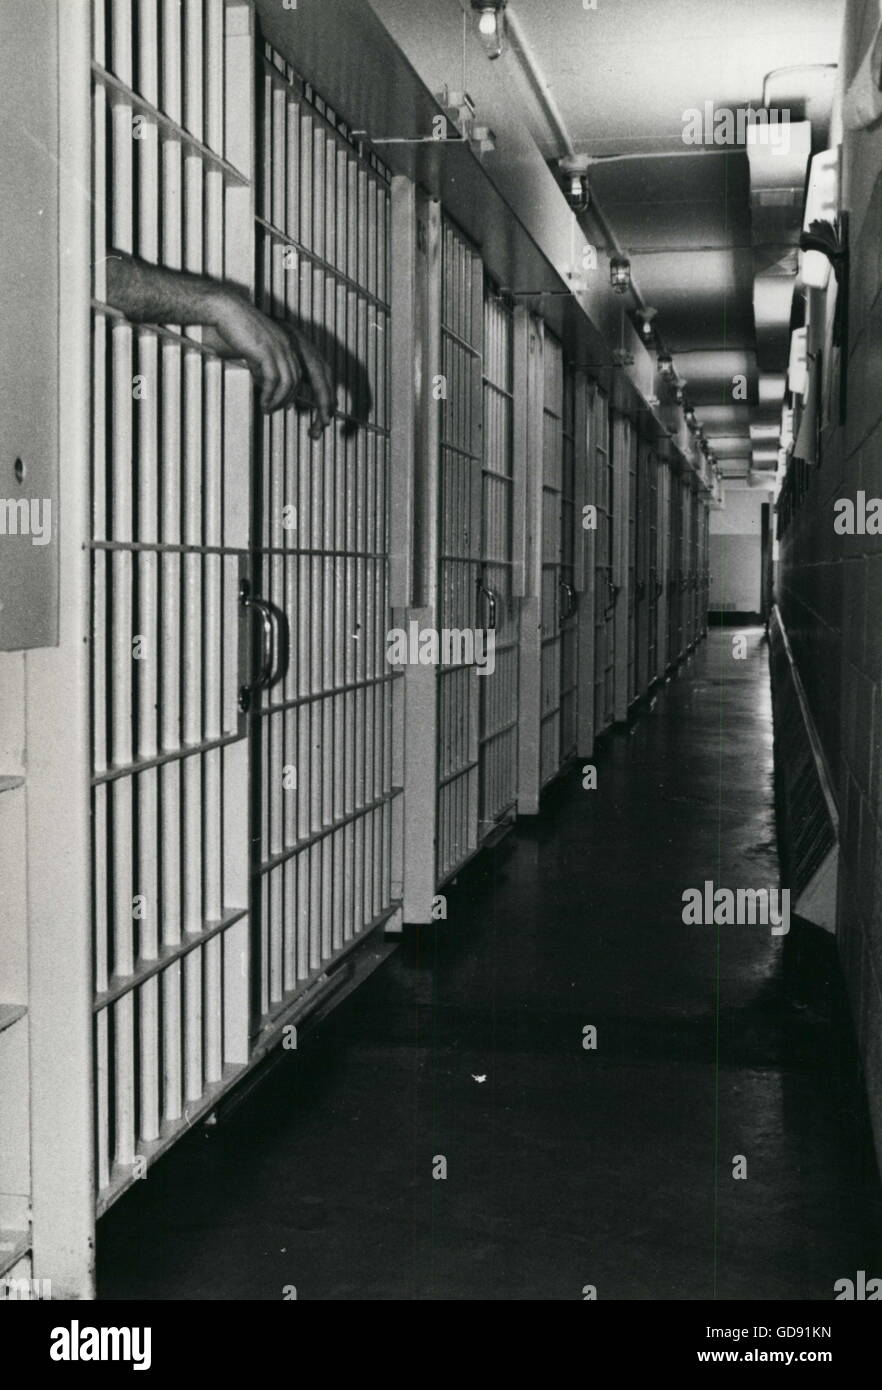 1970 - jail prison inmate hands bars incarcerate © Keystone Pictures USA/ZUMAPRESS.com/Alamy Live News Stock Photo